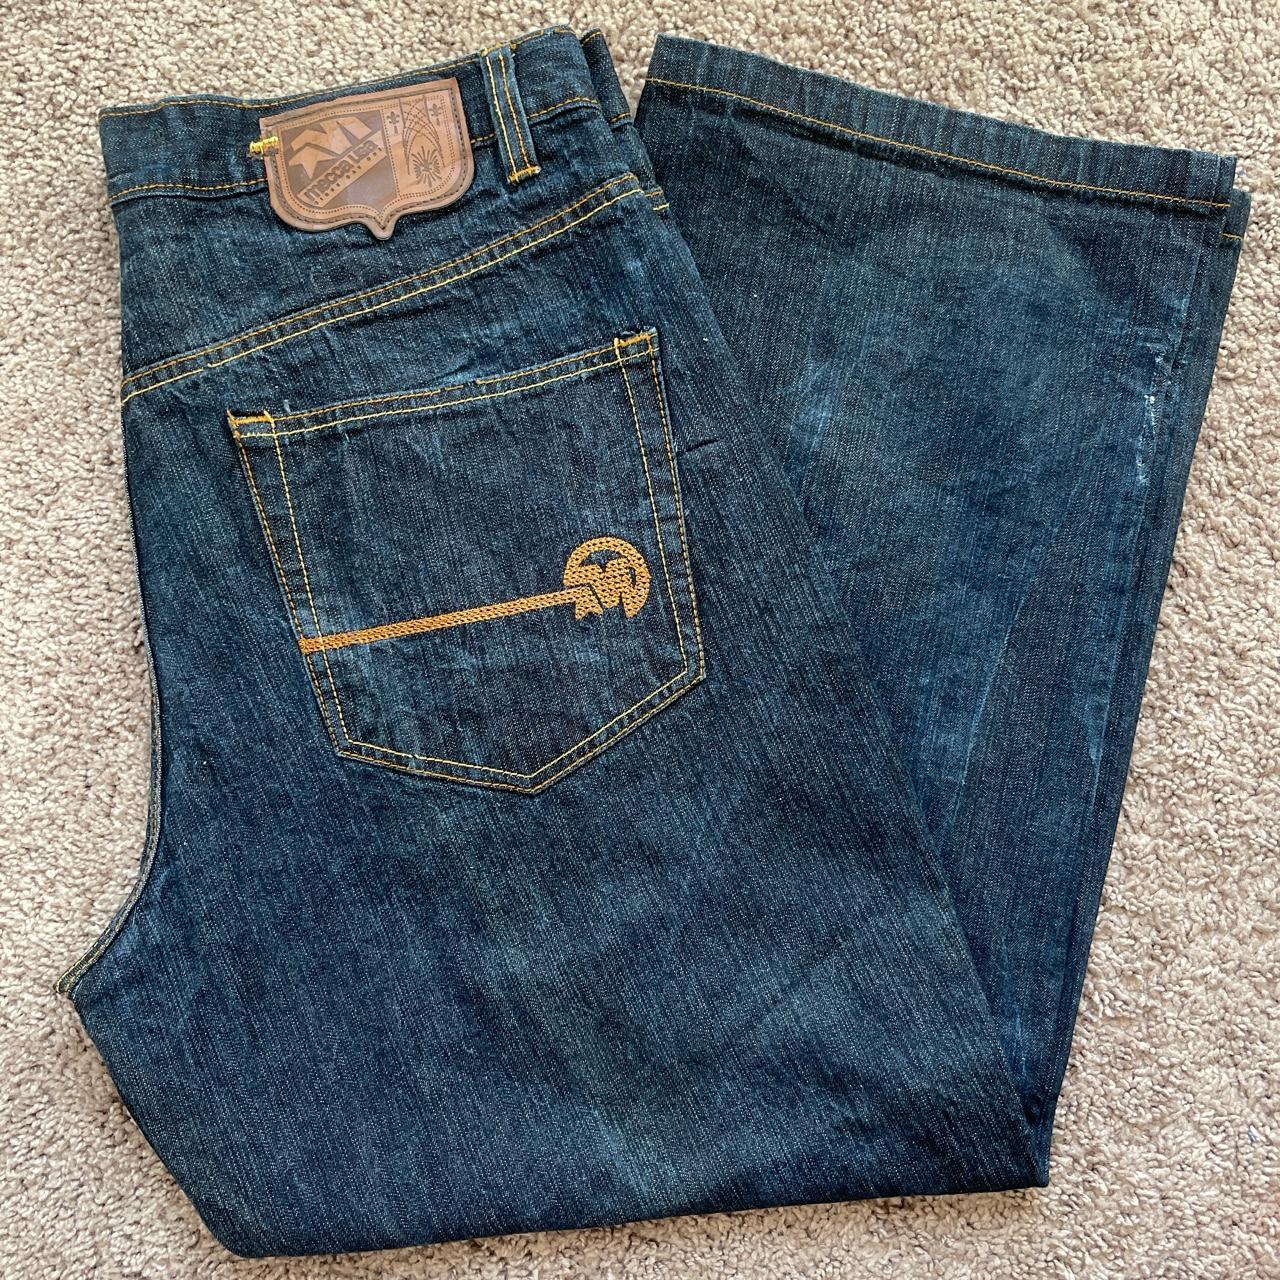 Vintage Mecca Jeans Size - 38x30 Great condition... - Depop